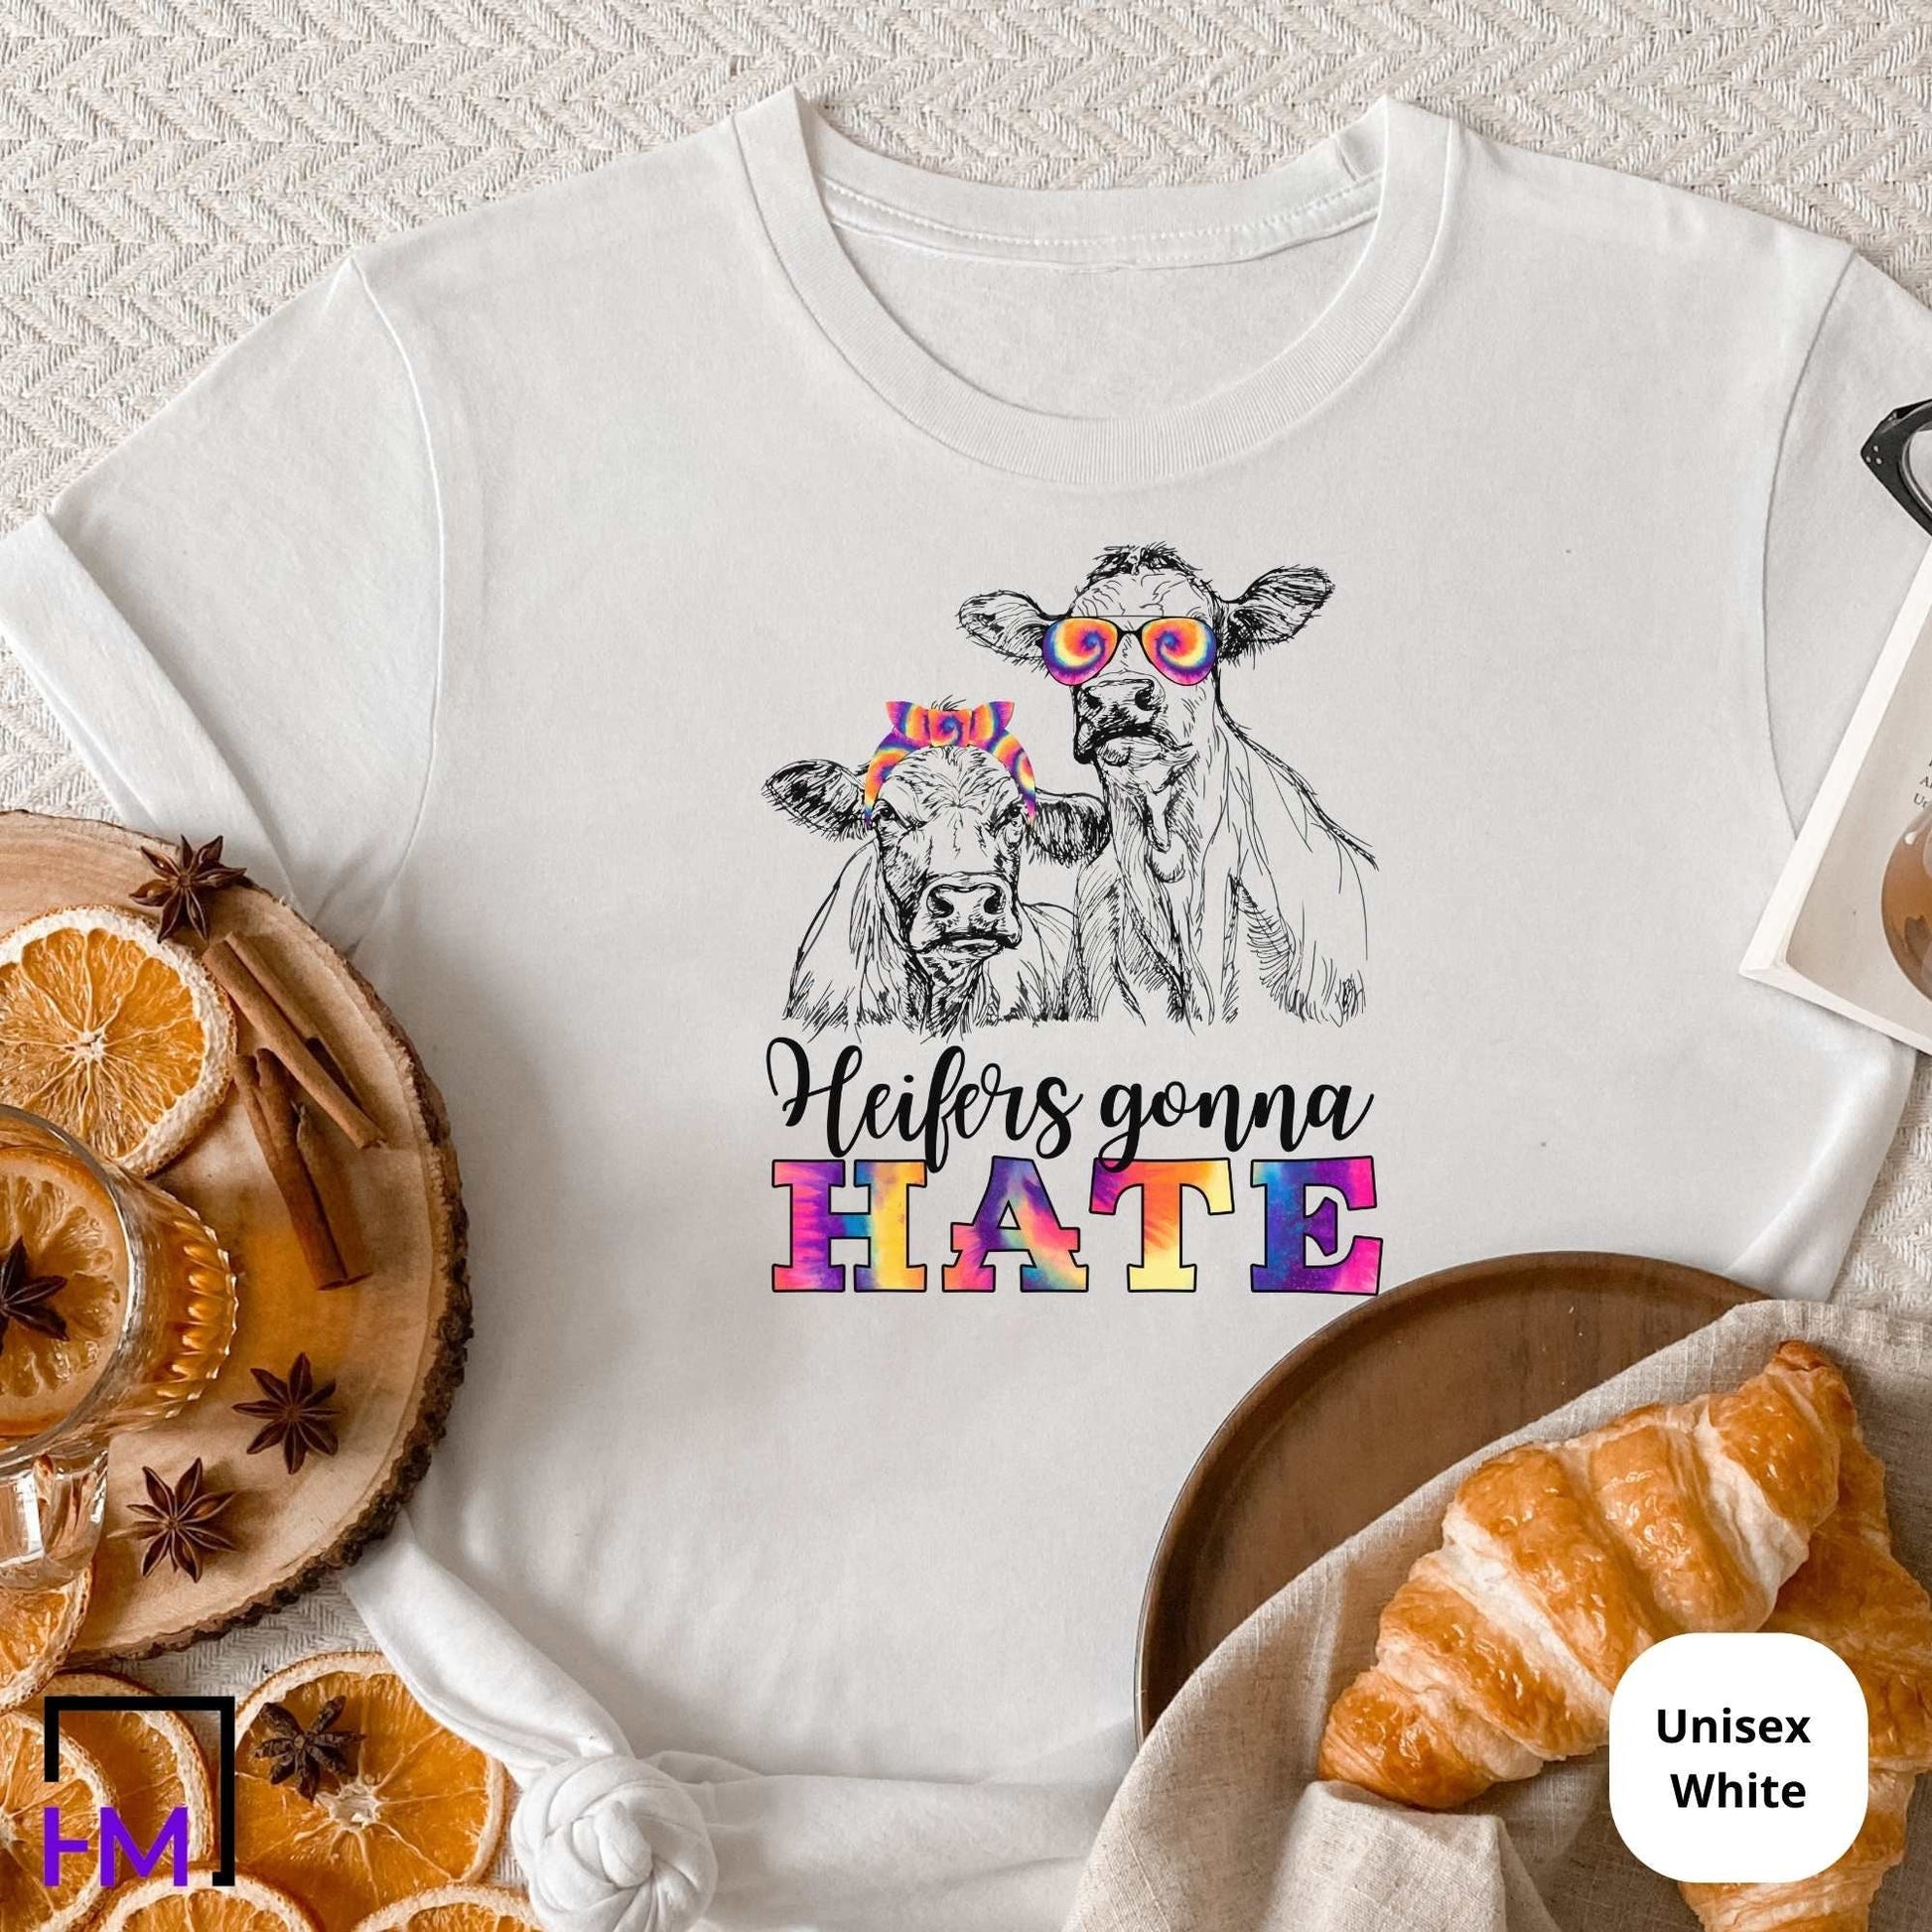 Funny Cow T-Shirt, Cow Lover Gift, Funny Farmer Sweater, Farming Gifts for Women, Barnyard Farm Girl Tshirts, Heifers Sweatshirt, Cowgirl T